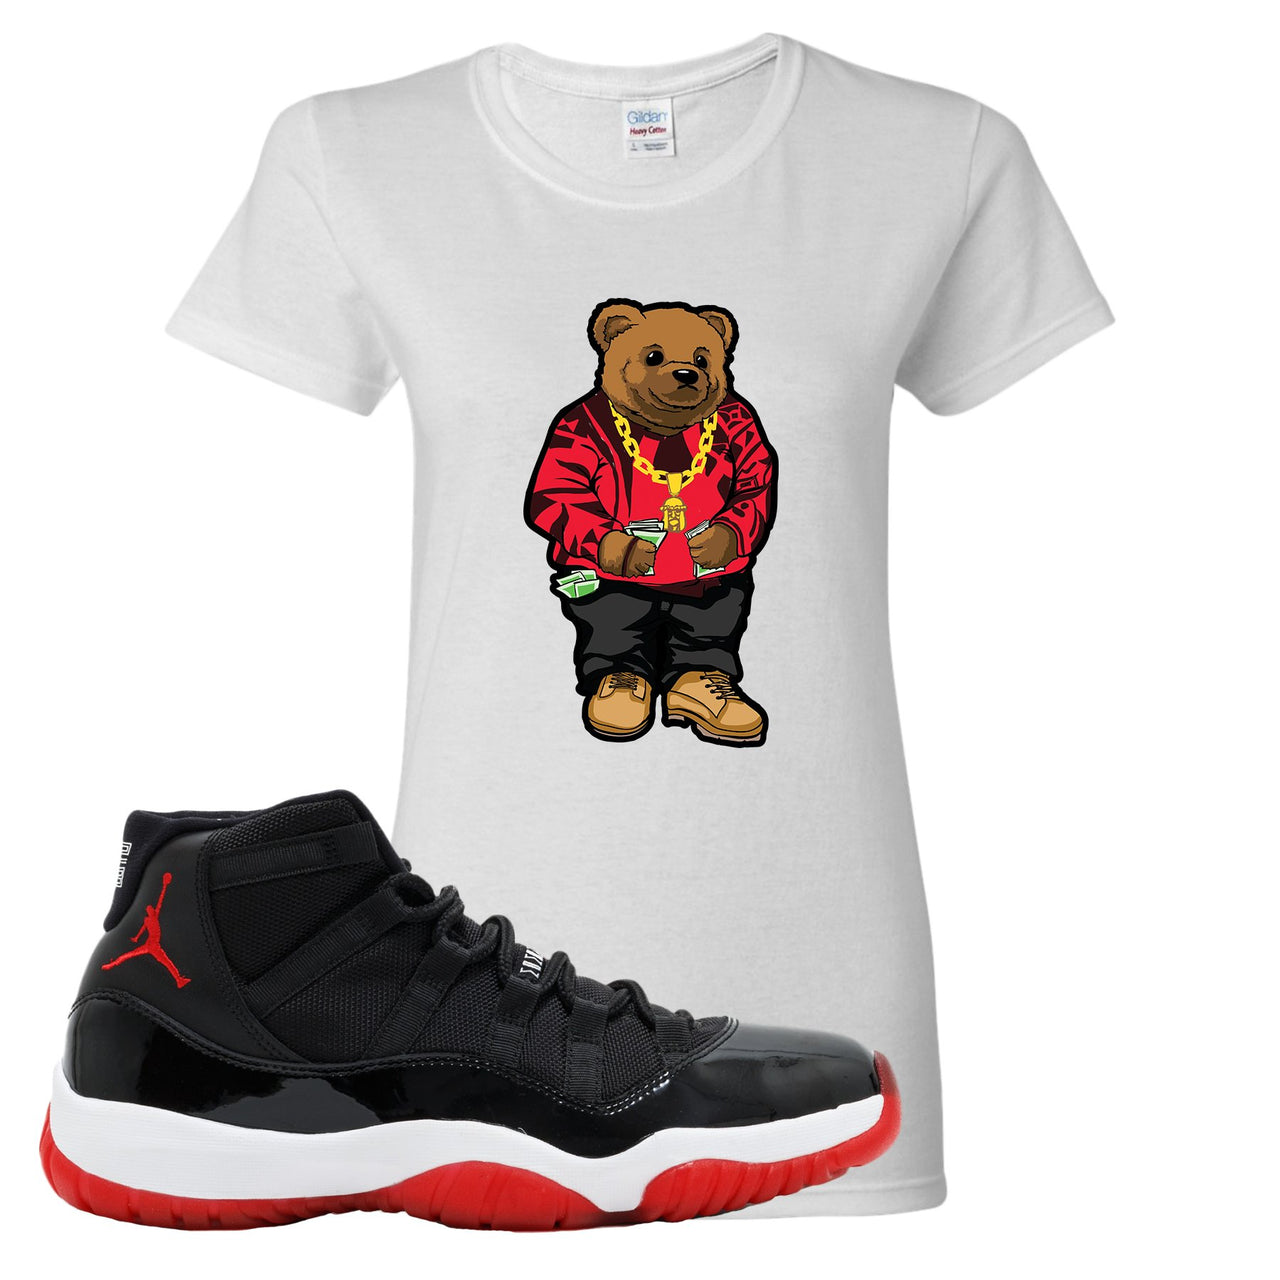 Jordan 11 Bred Sweater Bear White Sneaker Hook Up Women's T-Shirt